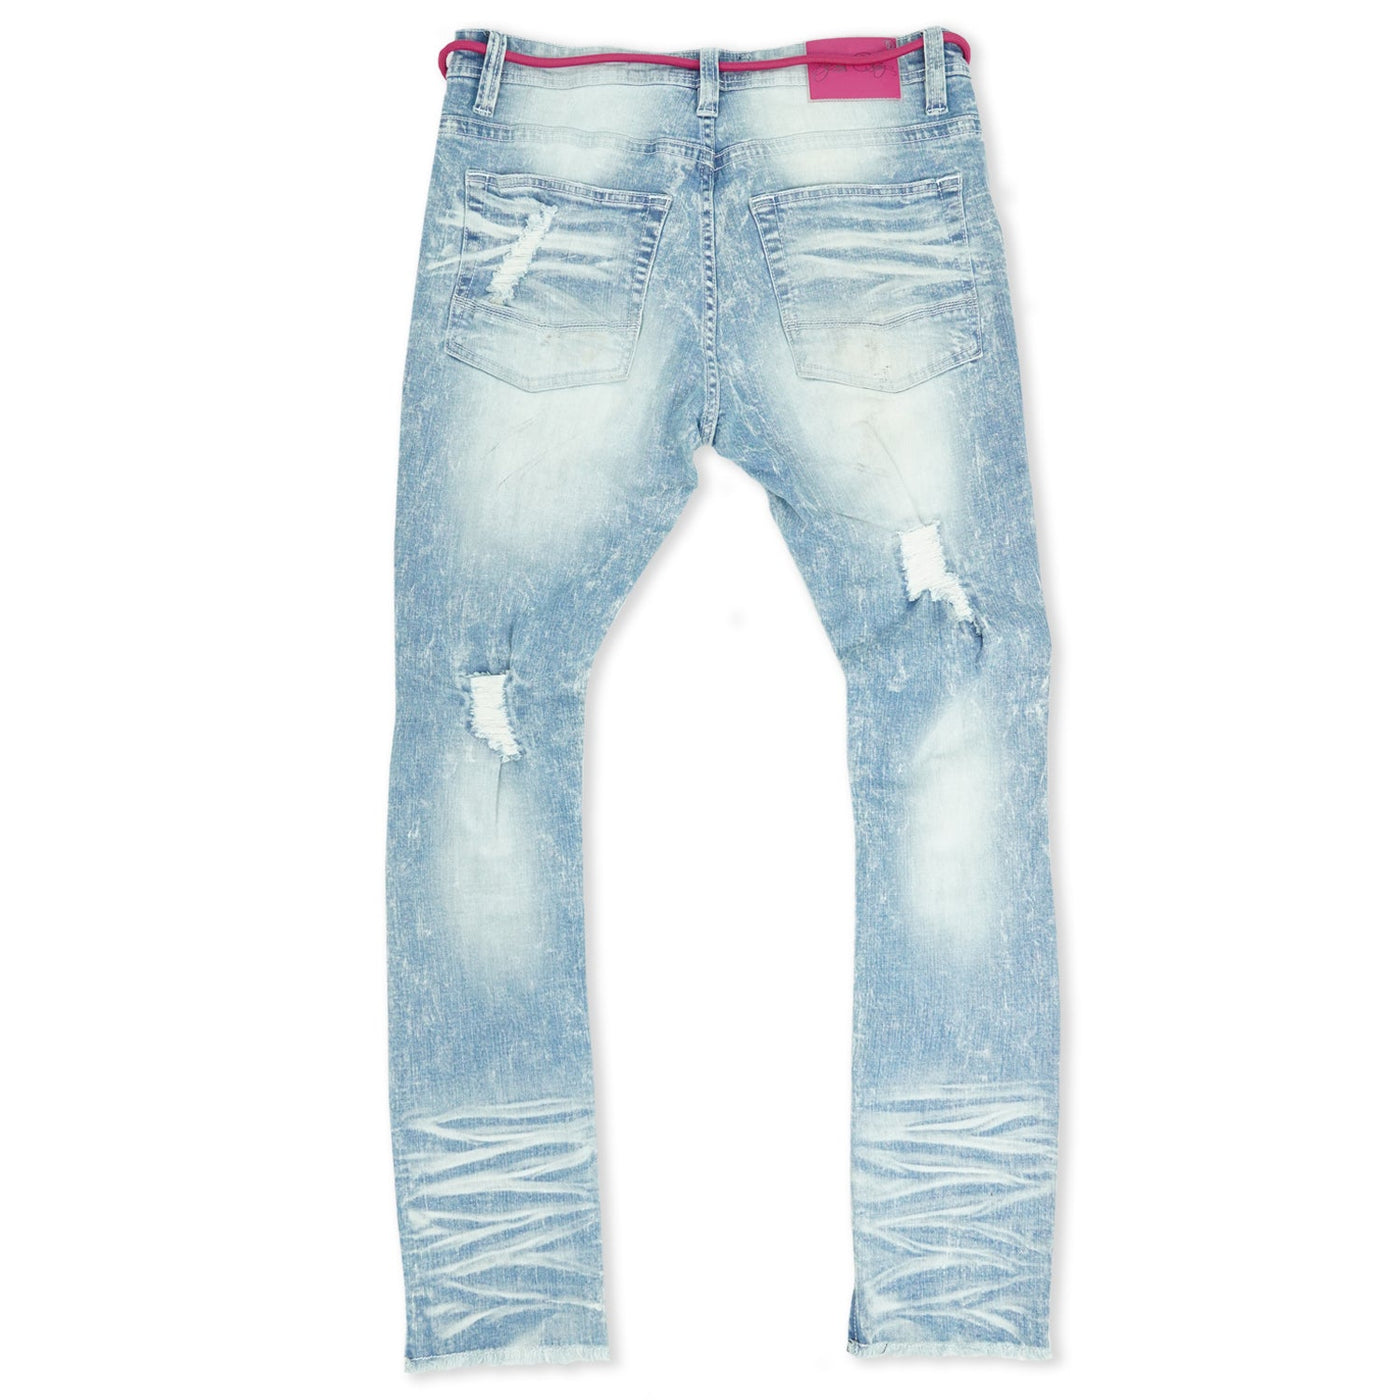 F1756 Denim Jeans w/ Rhinestones & Bottom Leg Zipper - Light Wash/Pink